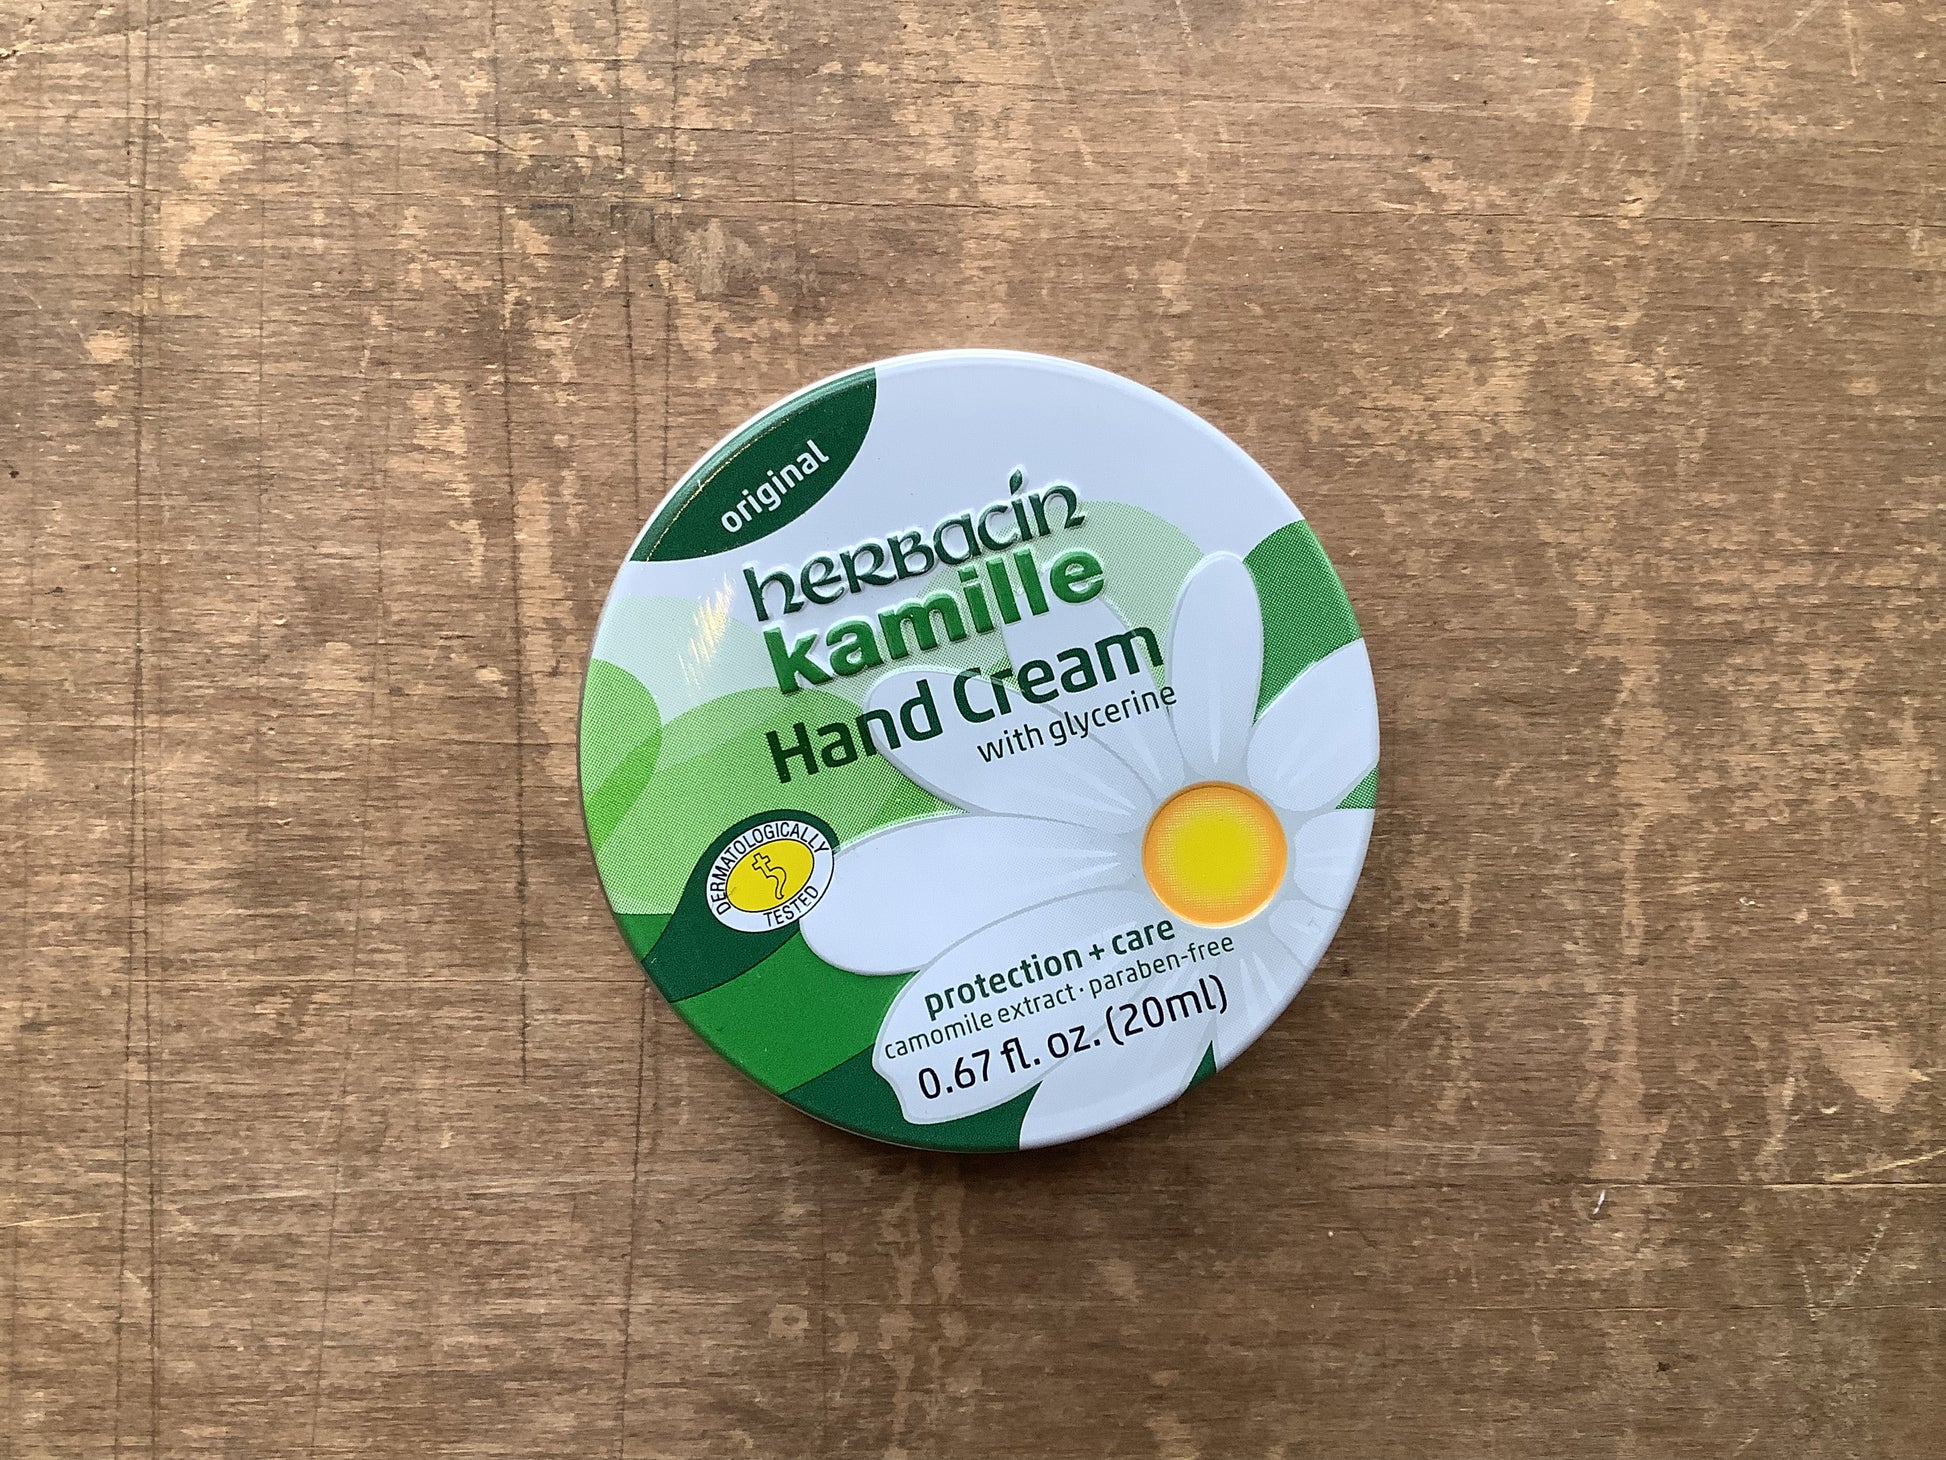 Herbacin brand kamille hand cream